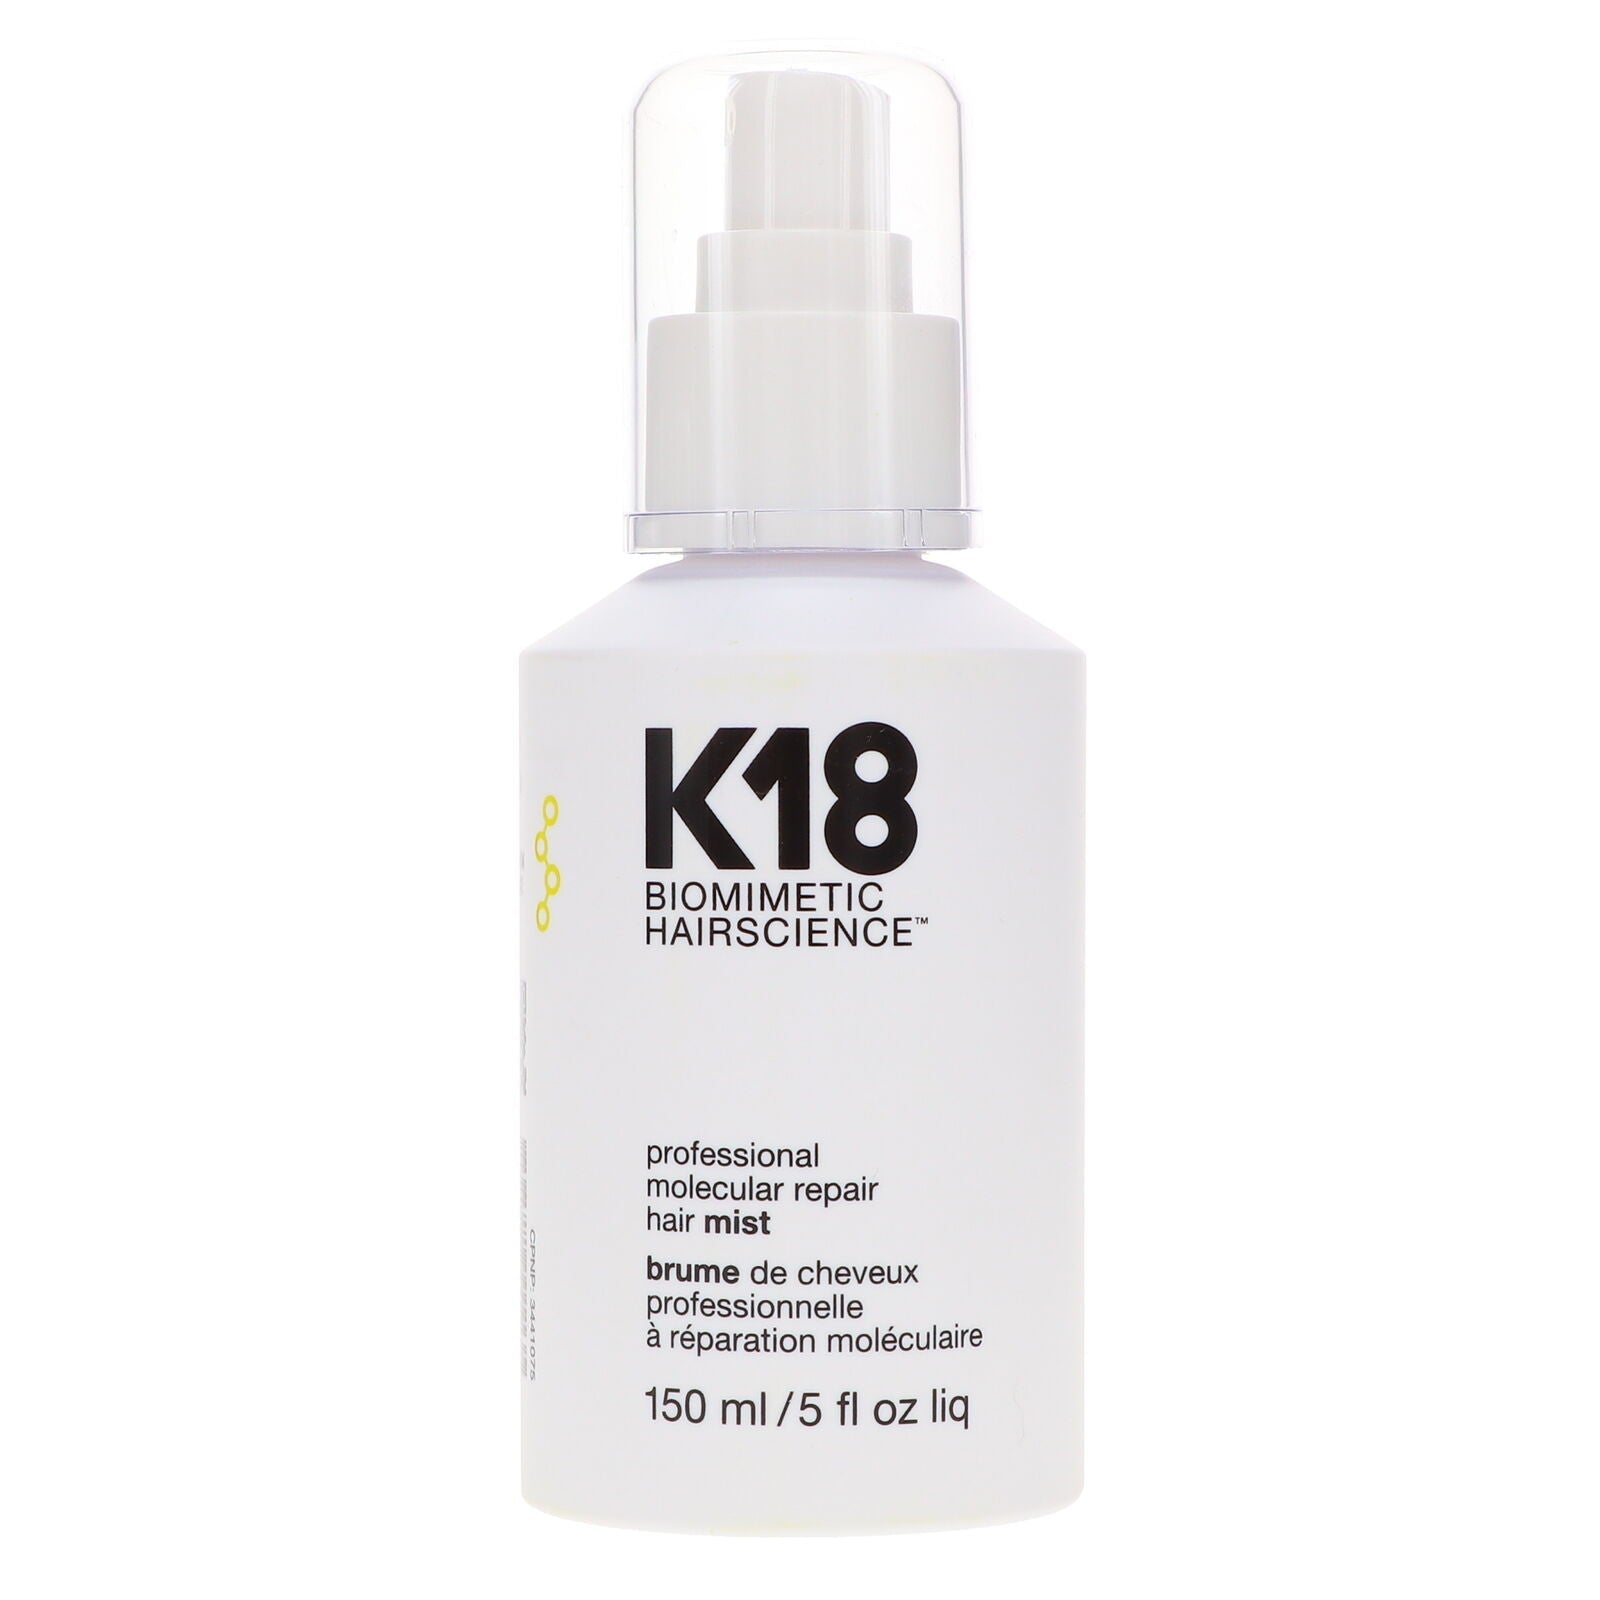 K18 Biomimetic Hairscience Professional Molecular Repair Hair Mist 150ml - Feel Gorgeous